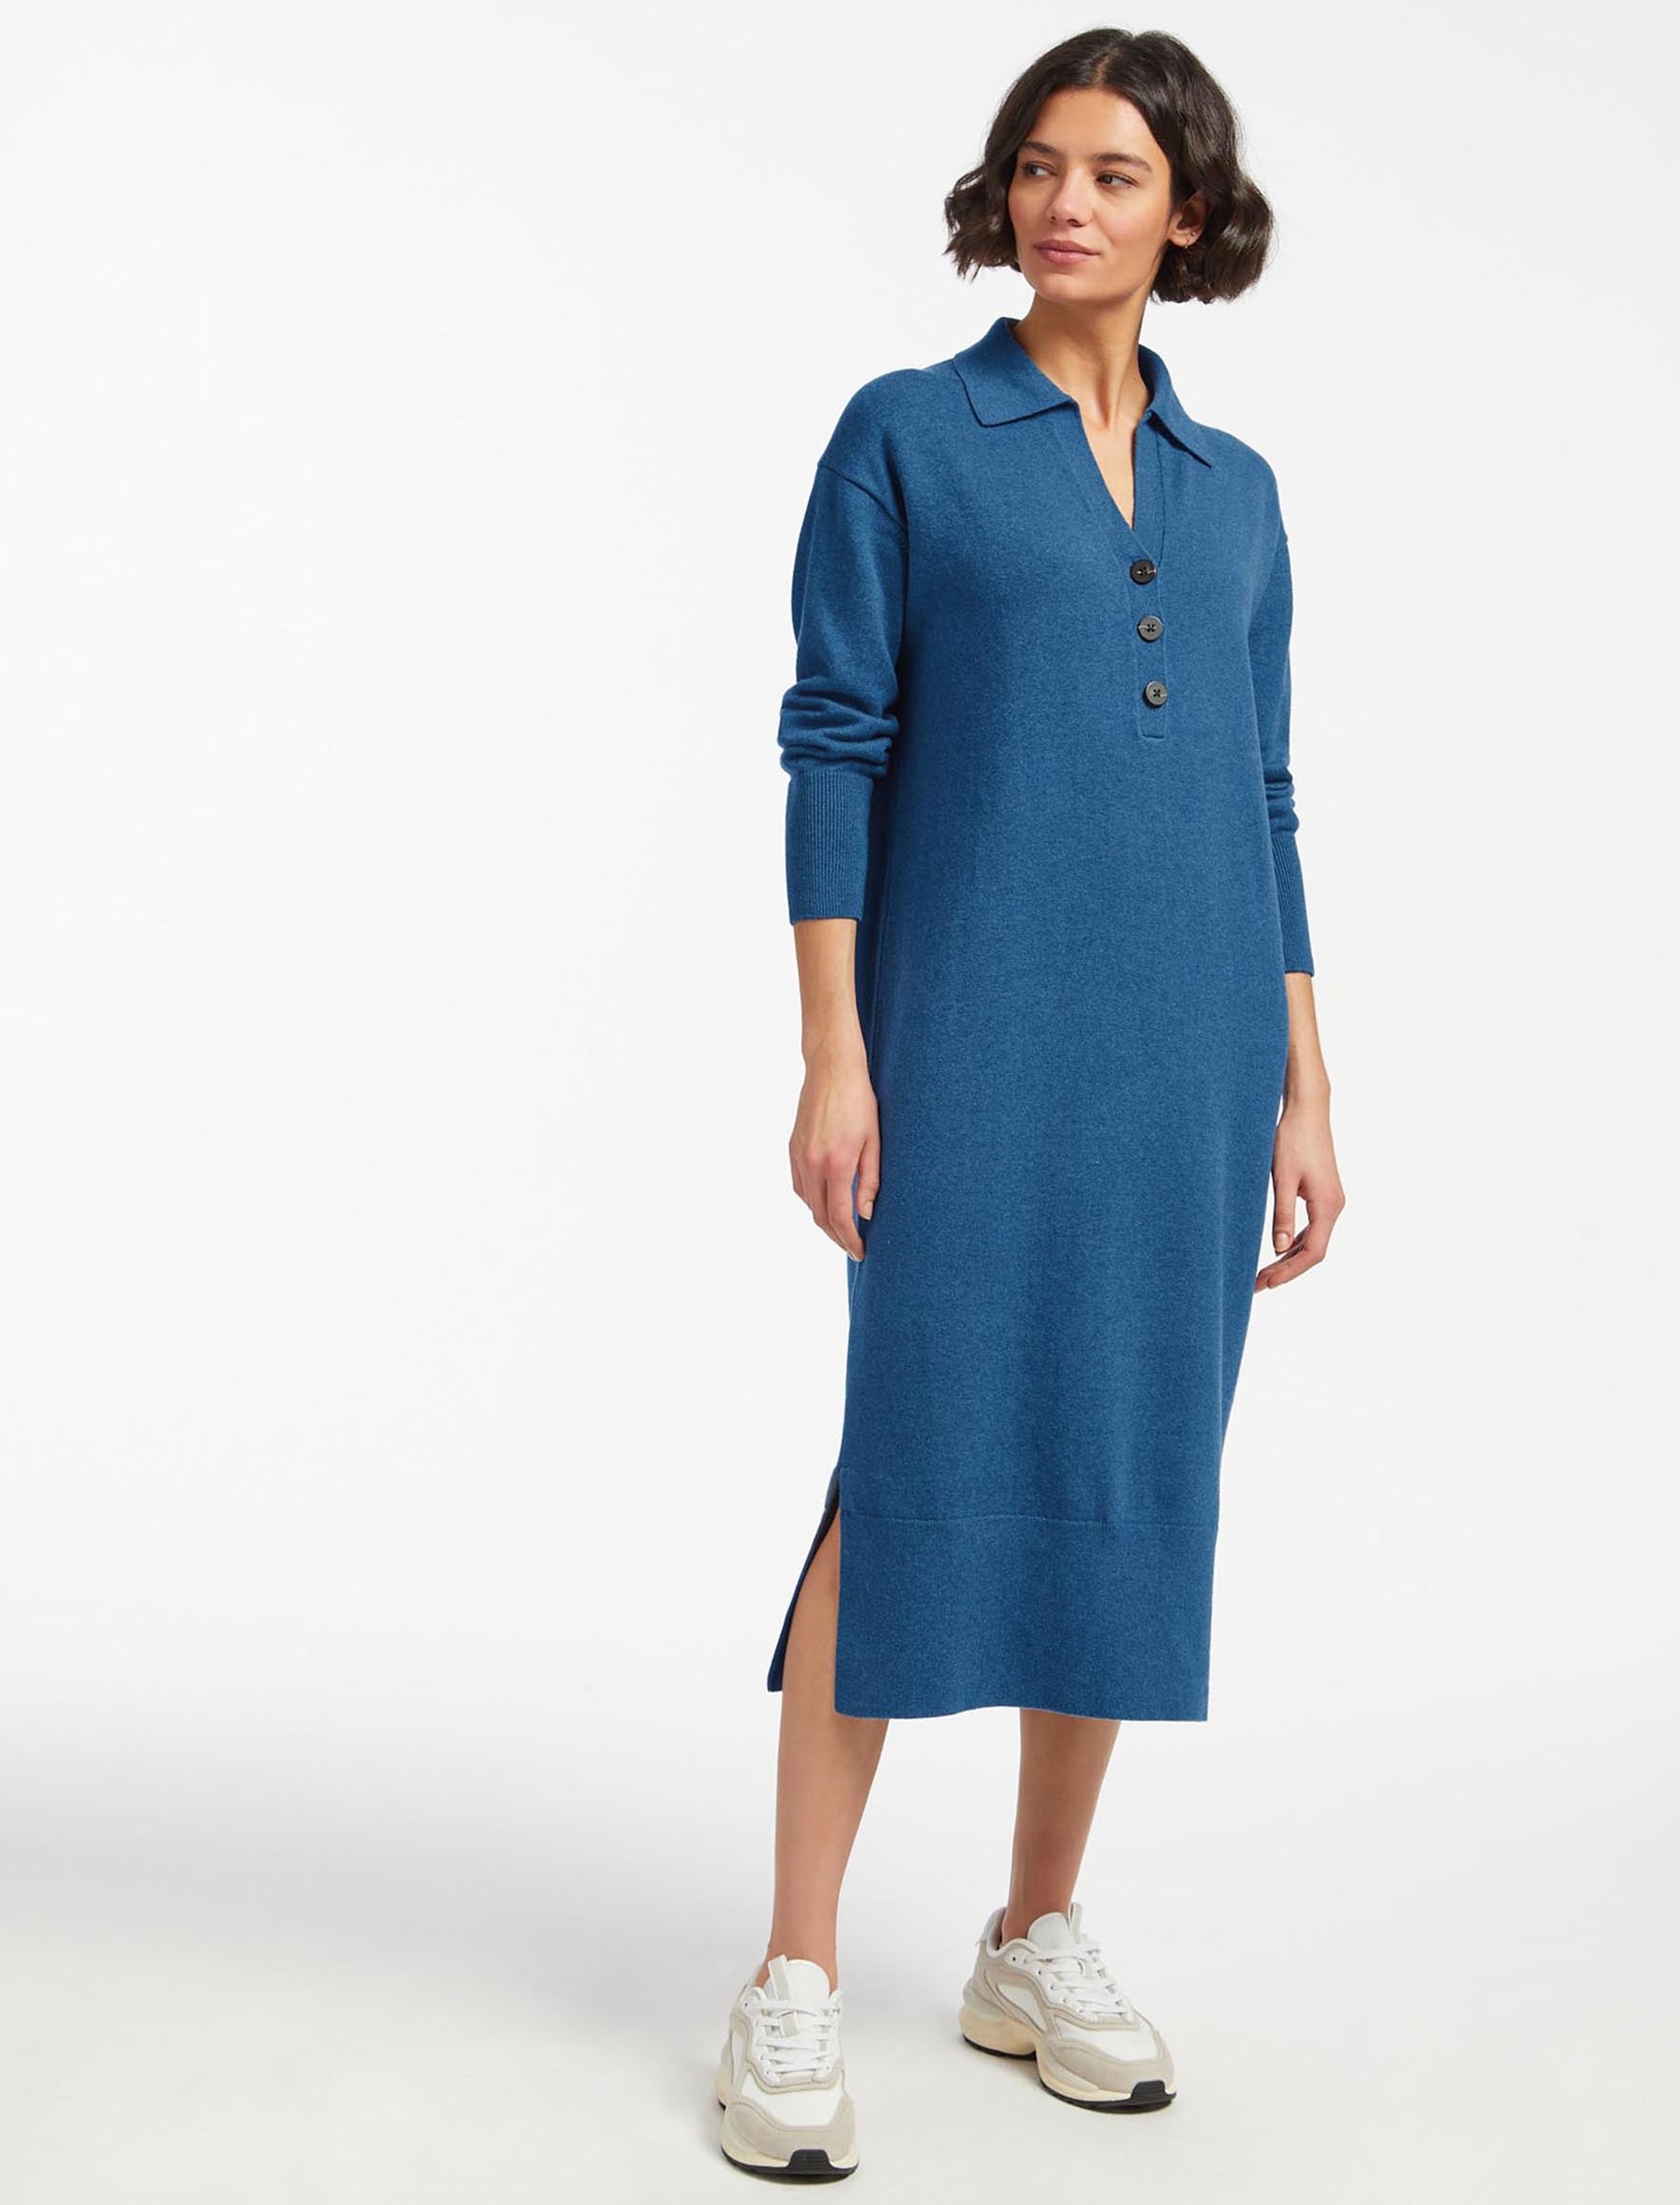 Cefinn Eleanor Wool Knit Dress - Mid Blue